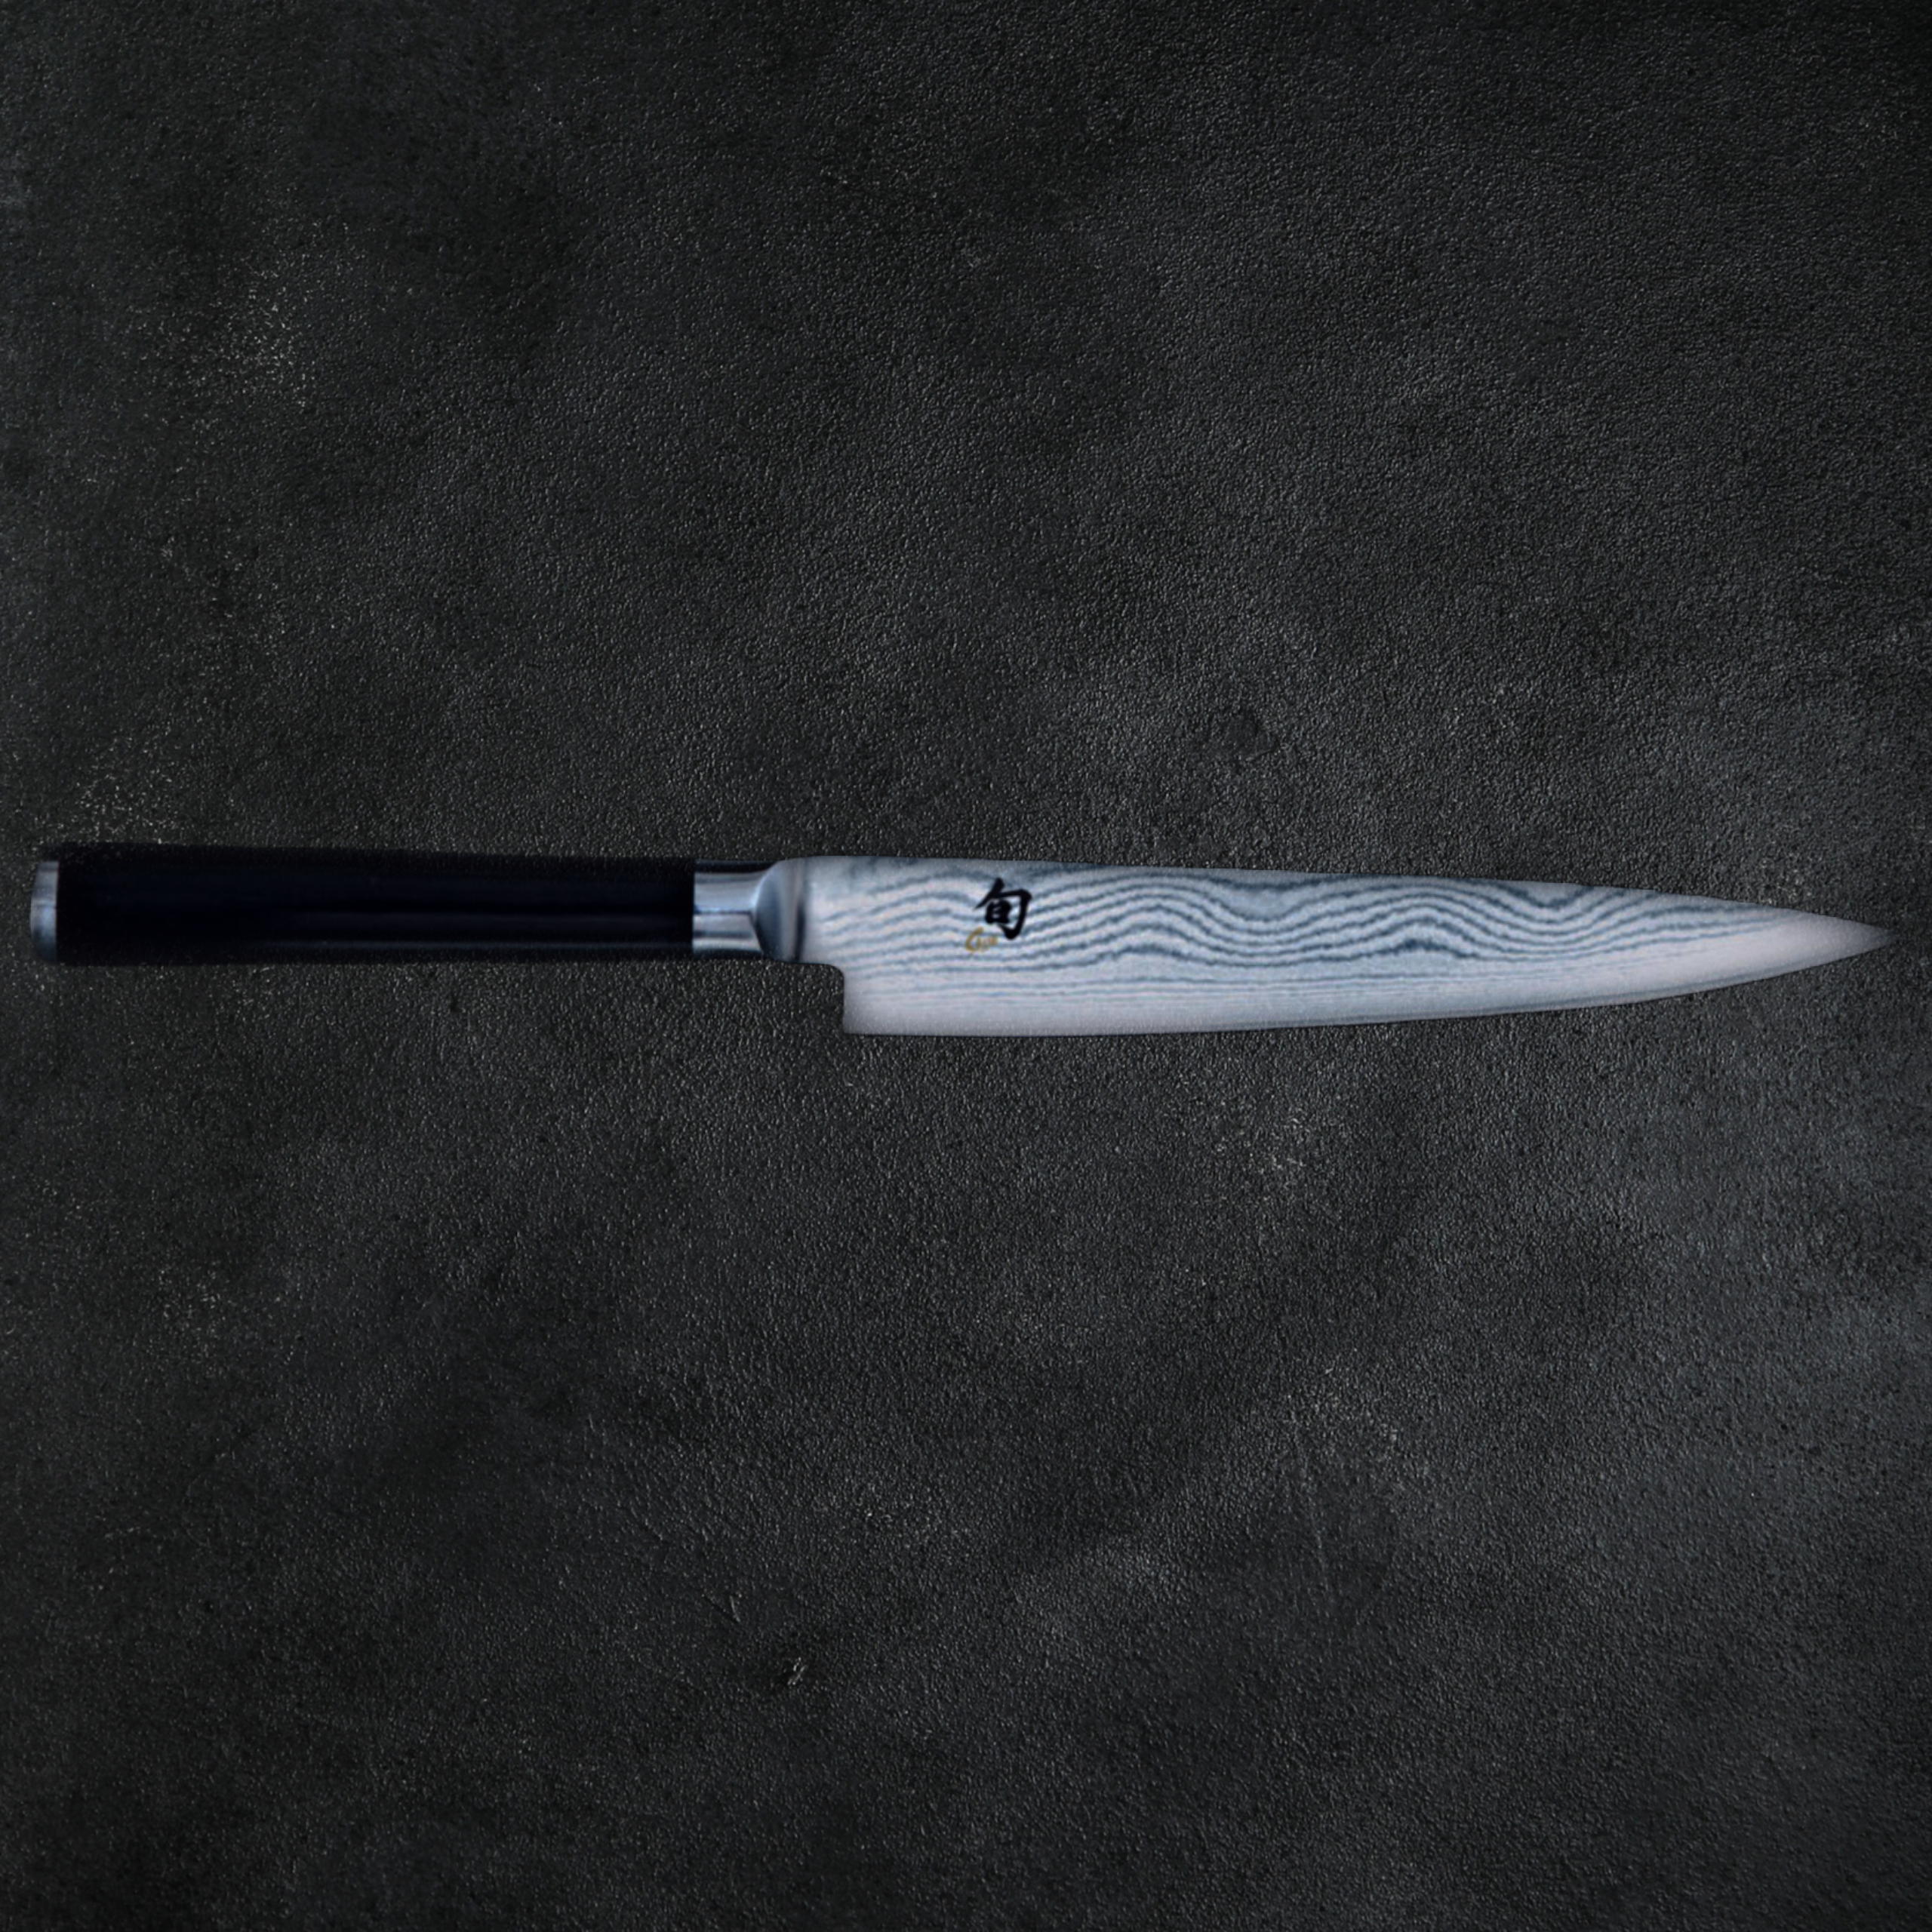 Kai Shun Classic Paring Knife 10.3cm